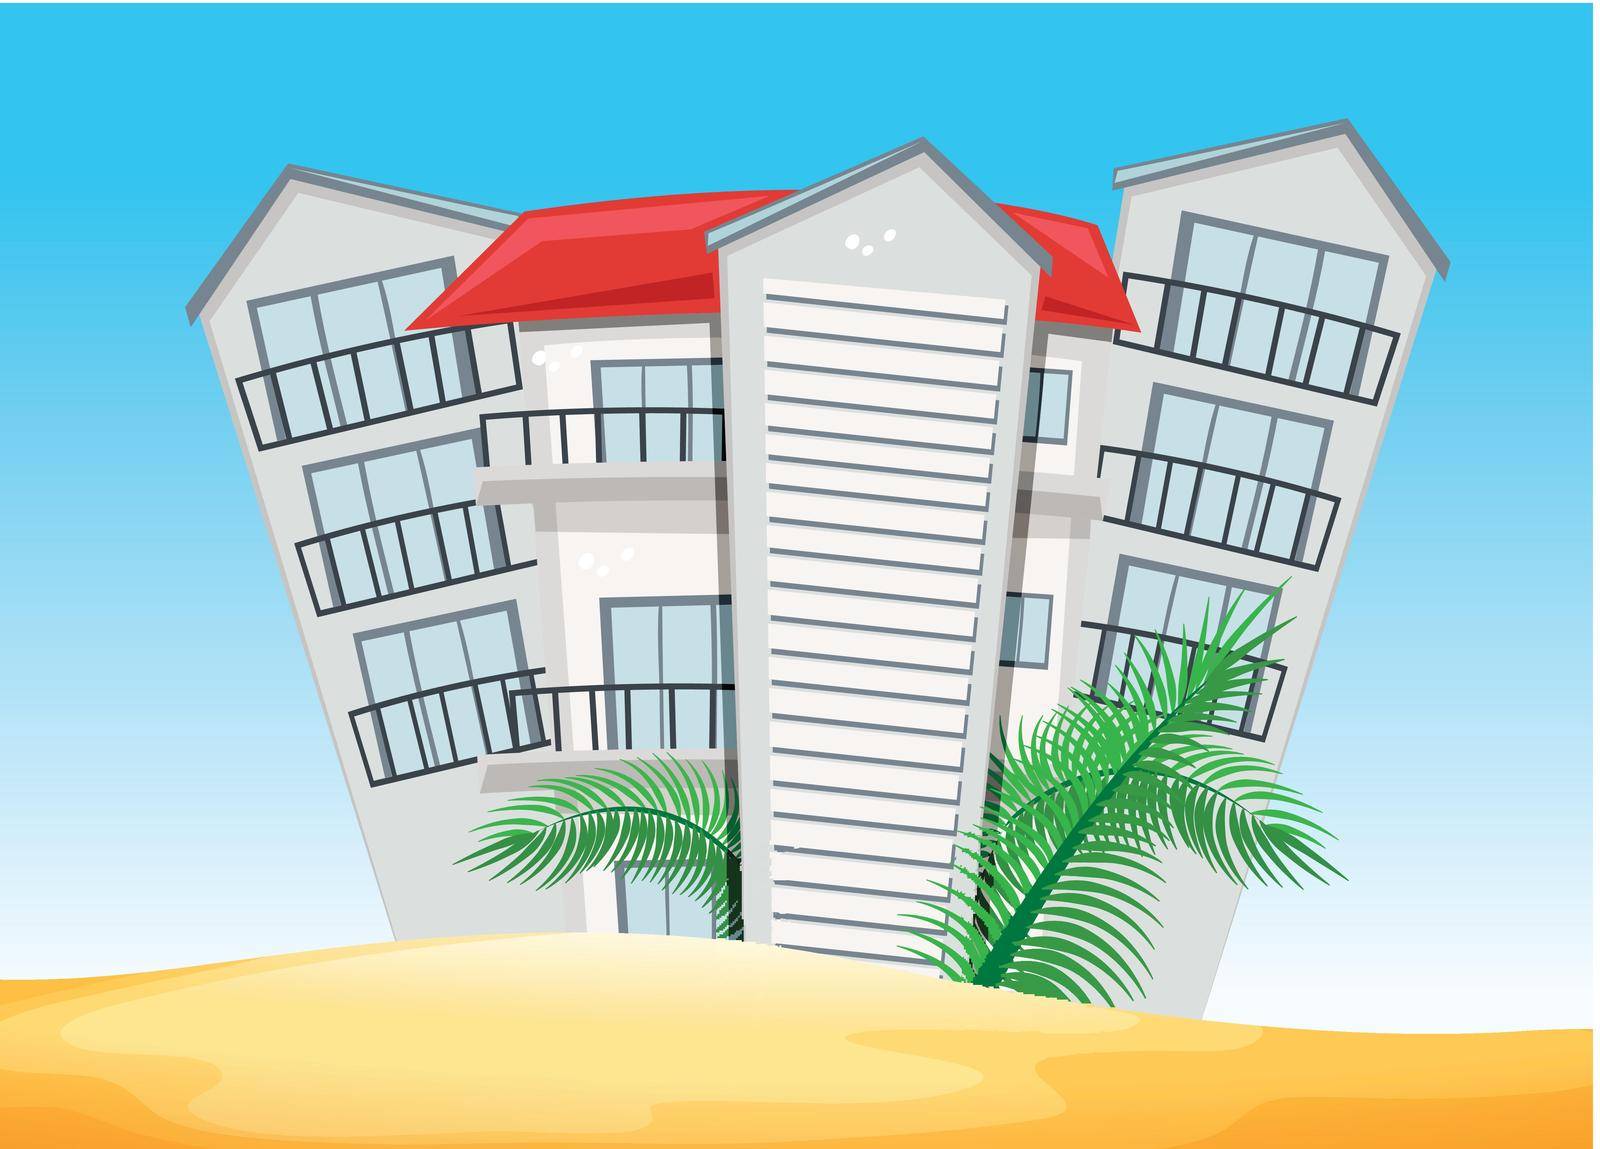 Buildings on the beach illustration